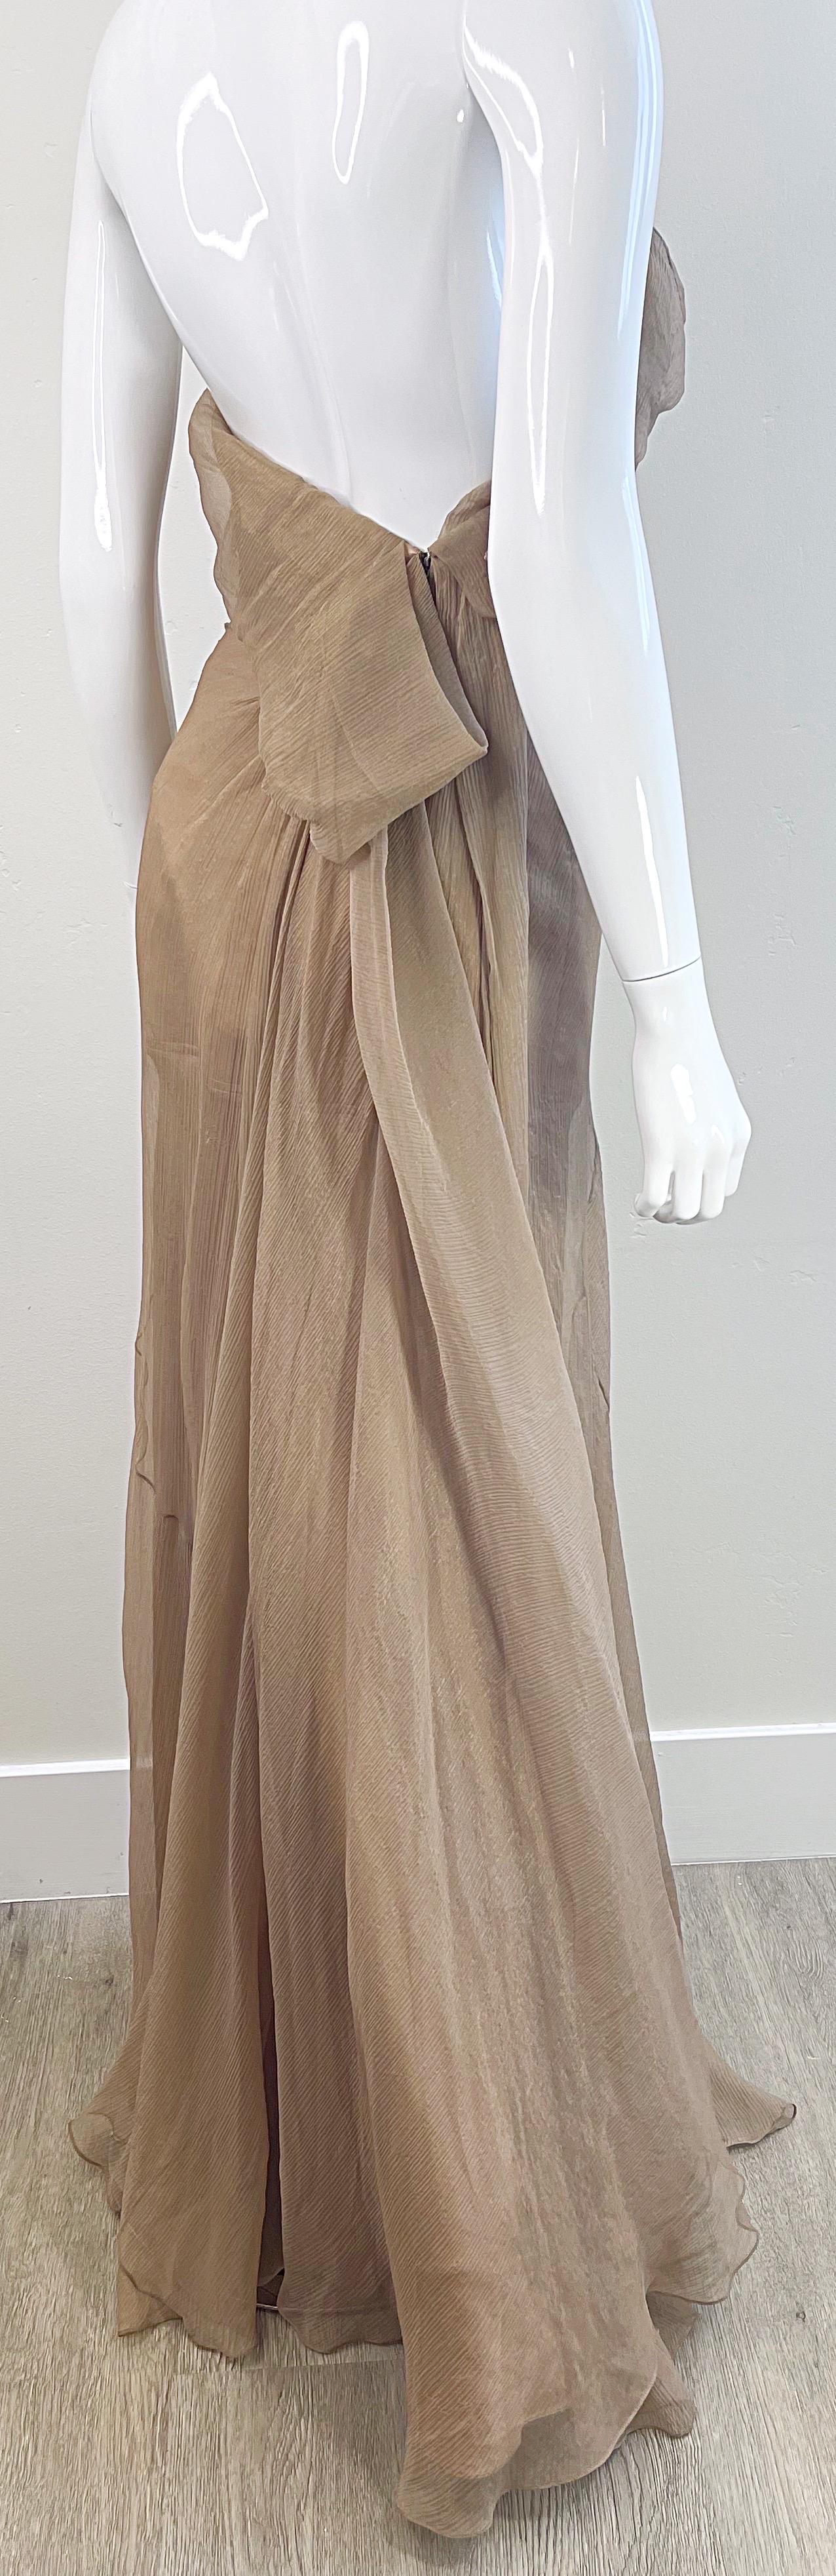 NWT Donna Karan Fall 2011 Runway Silk Organza Size 4 / 6 Nude Gold Gown Dress For Sale 12